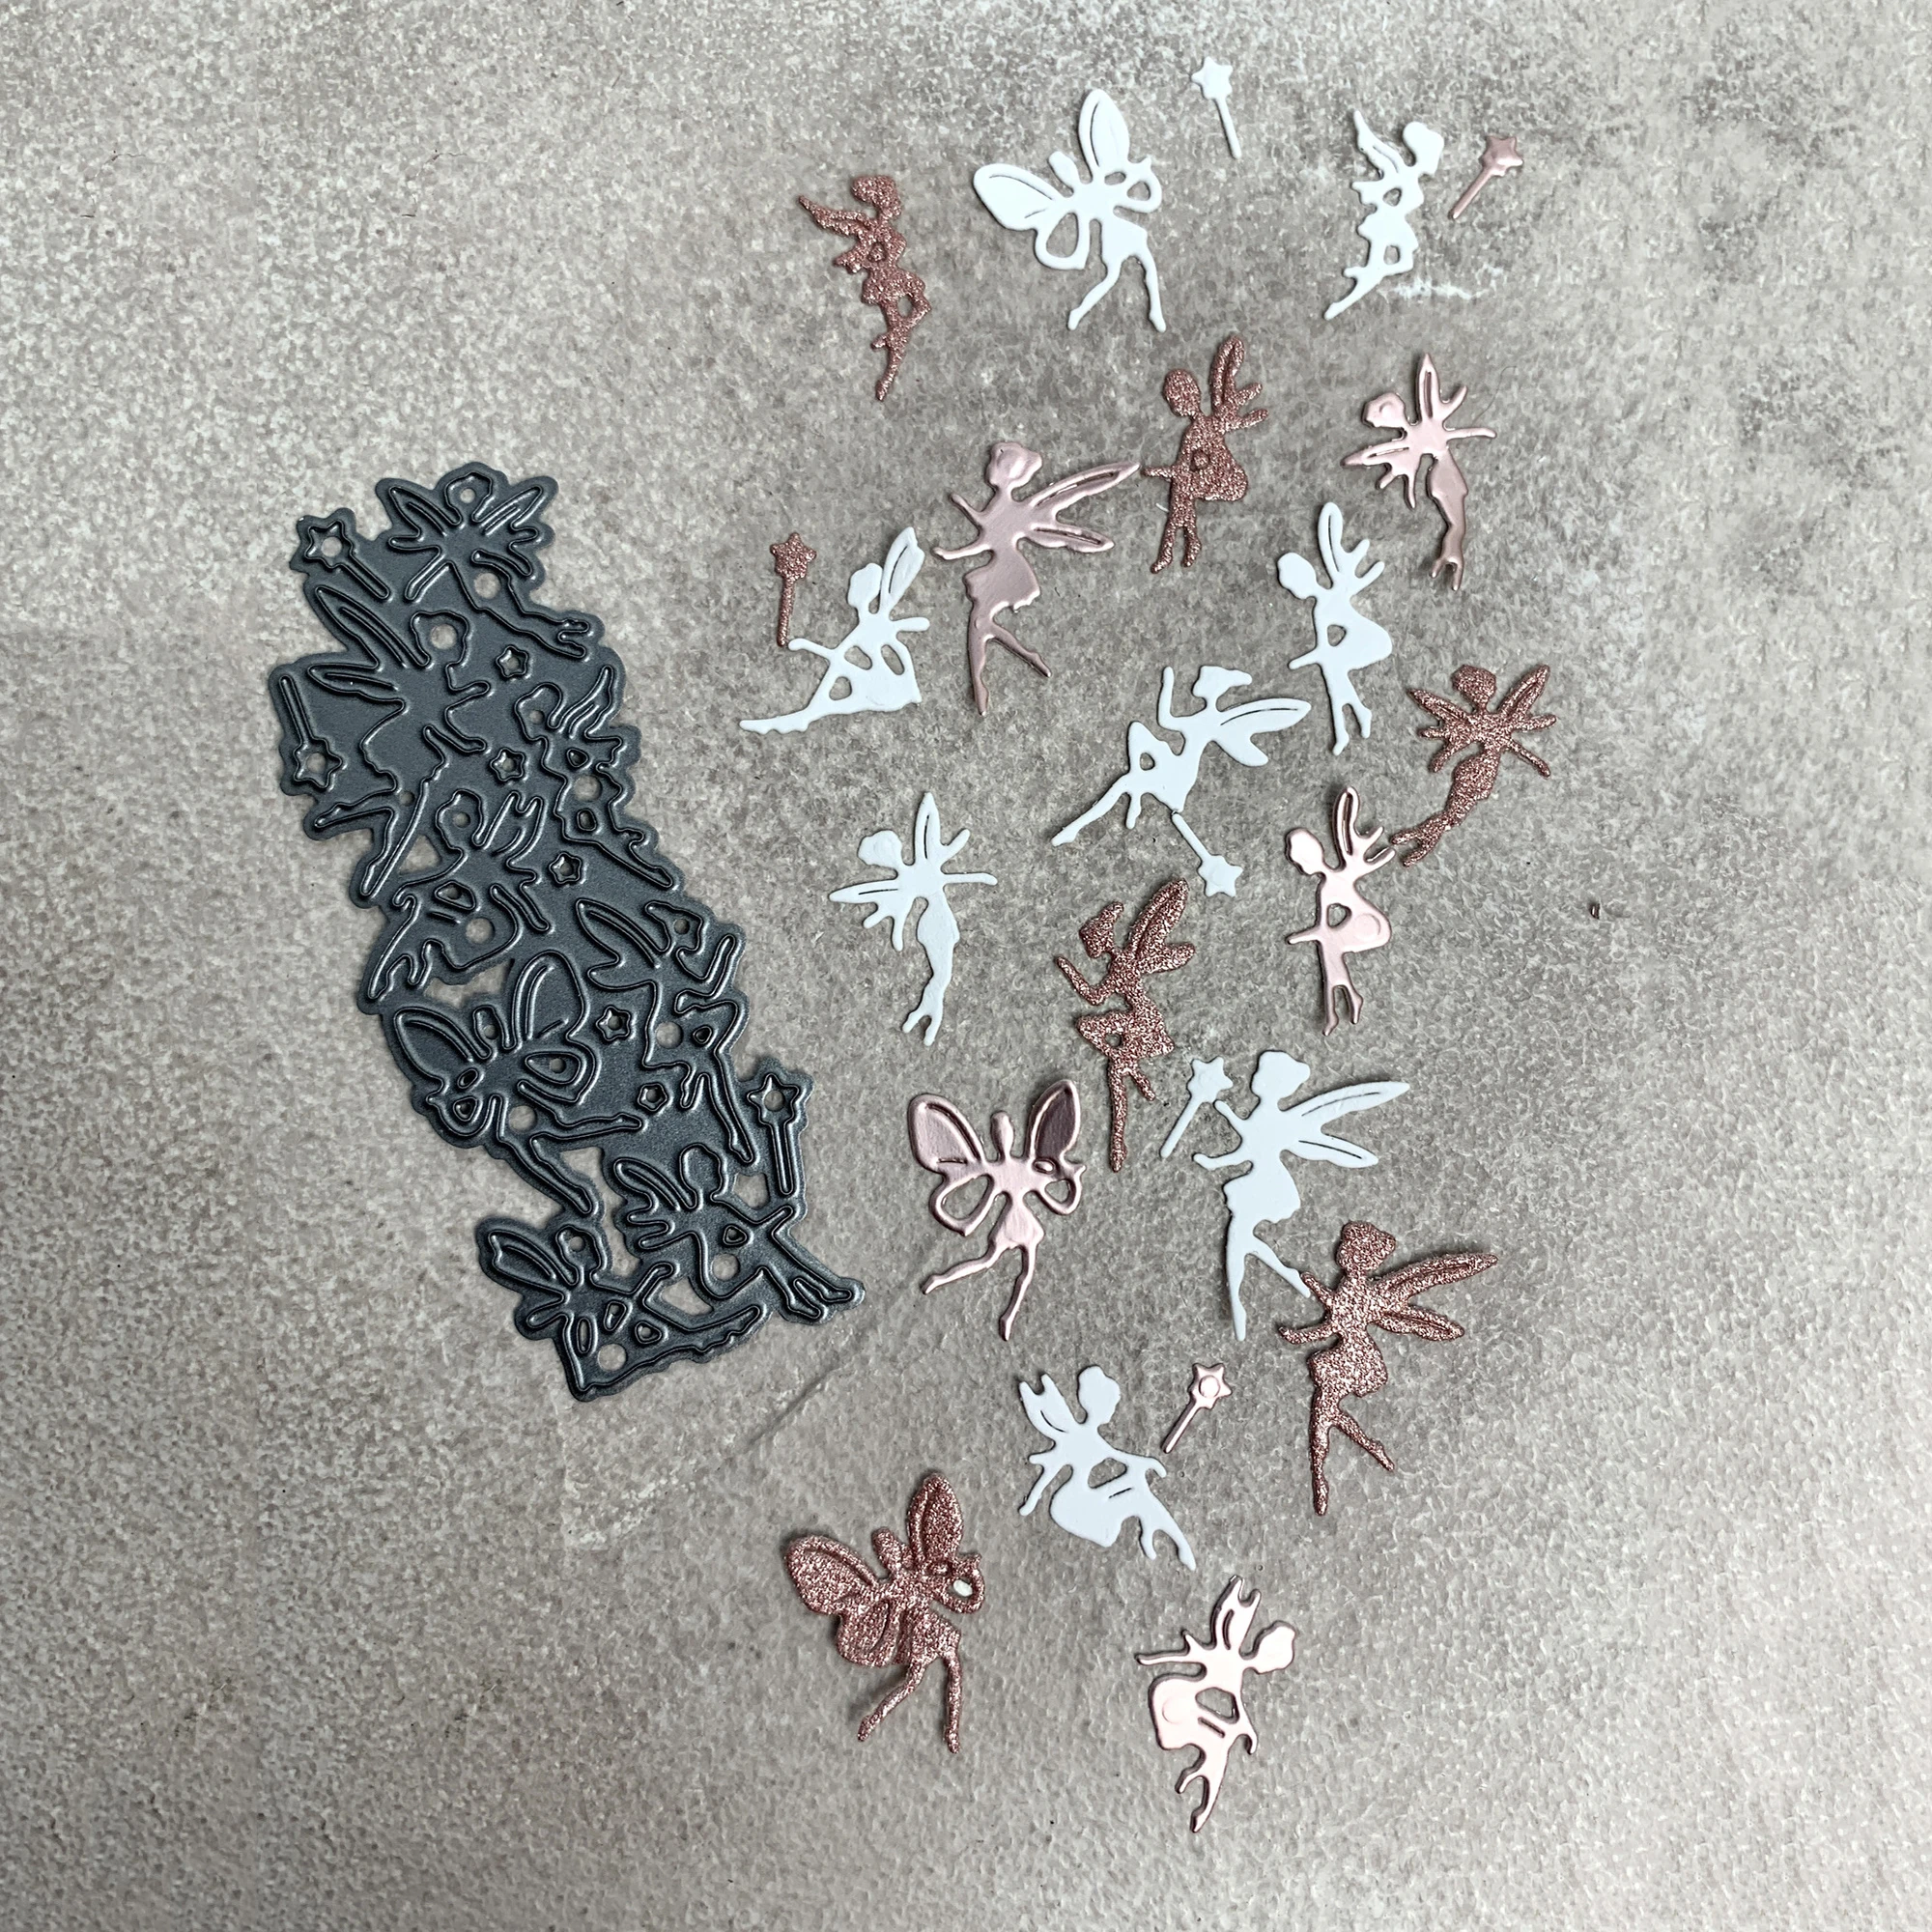 Flower Fairies Metal Cutting Dies 2022 New Scrapbooking Album Paper Decorative Crafts Card Embossing  Templates